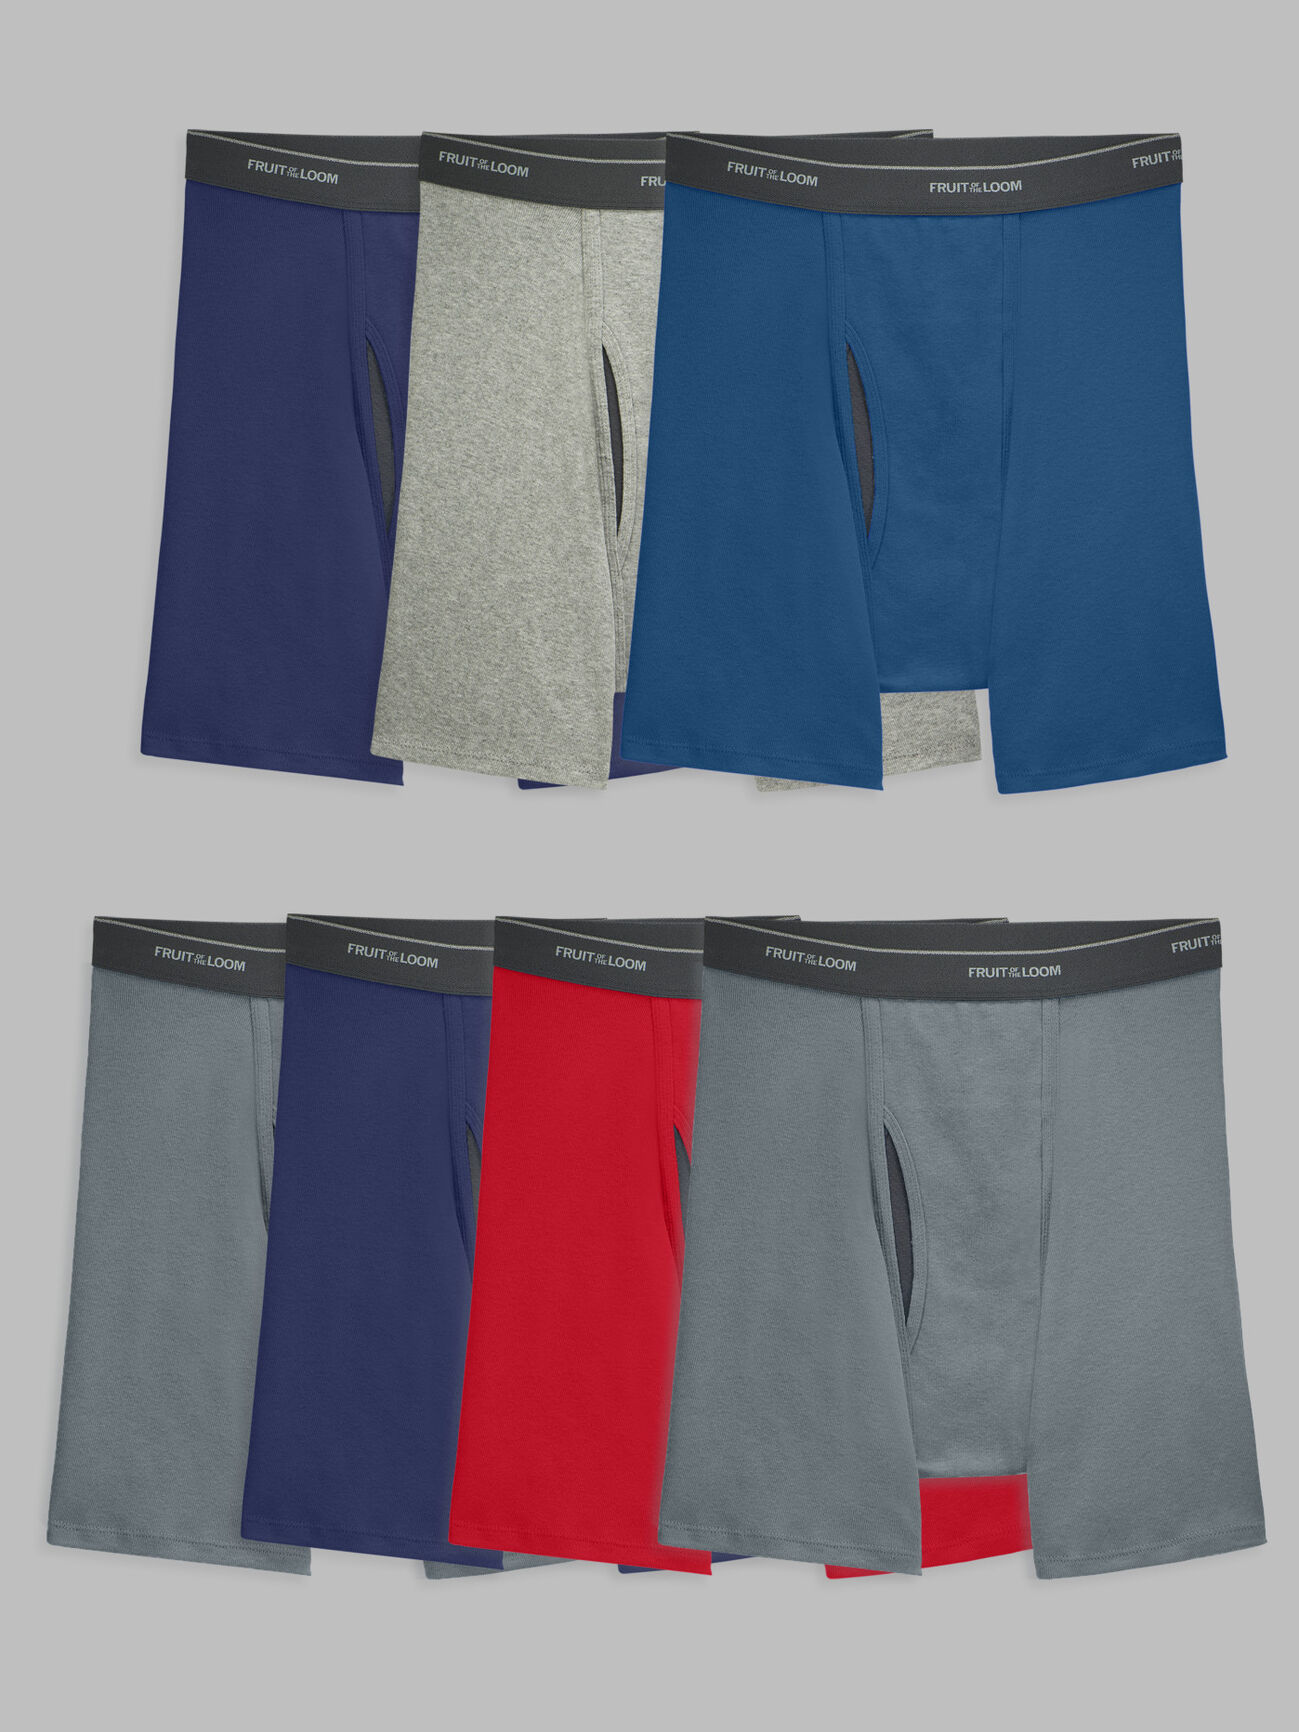 Modal Lite Extra Soft Boxer Cut Men's Underwear (2-pack) – More Than Basics